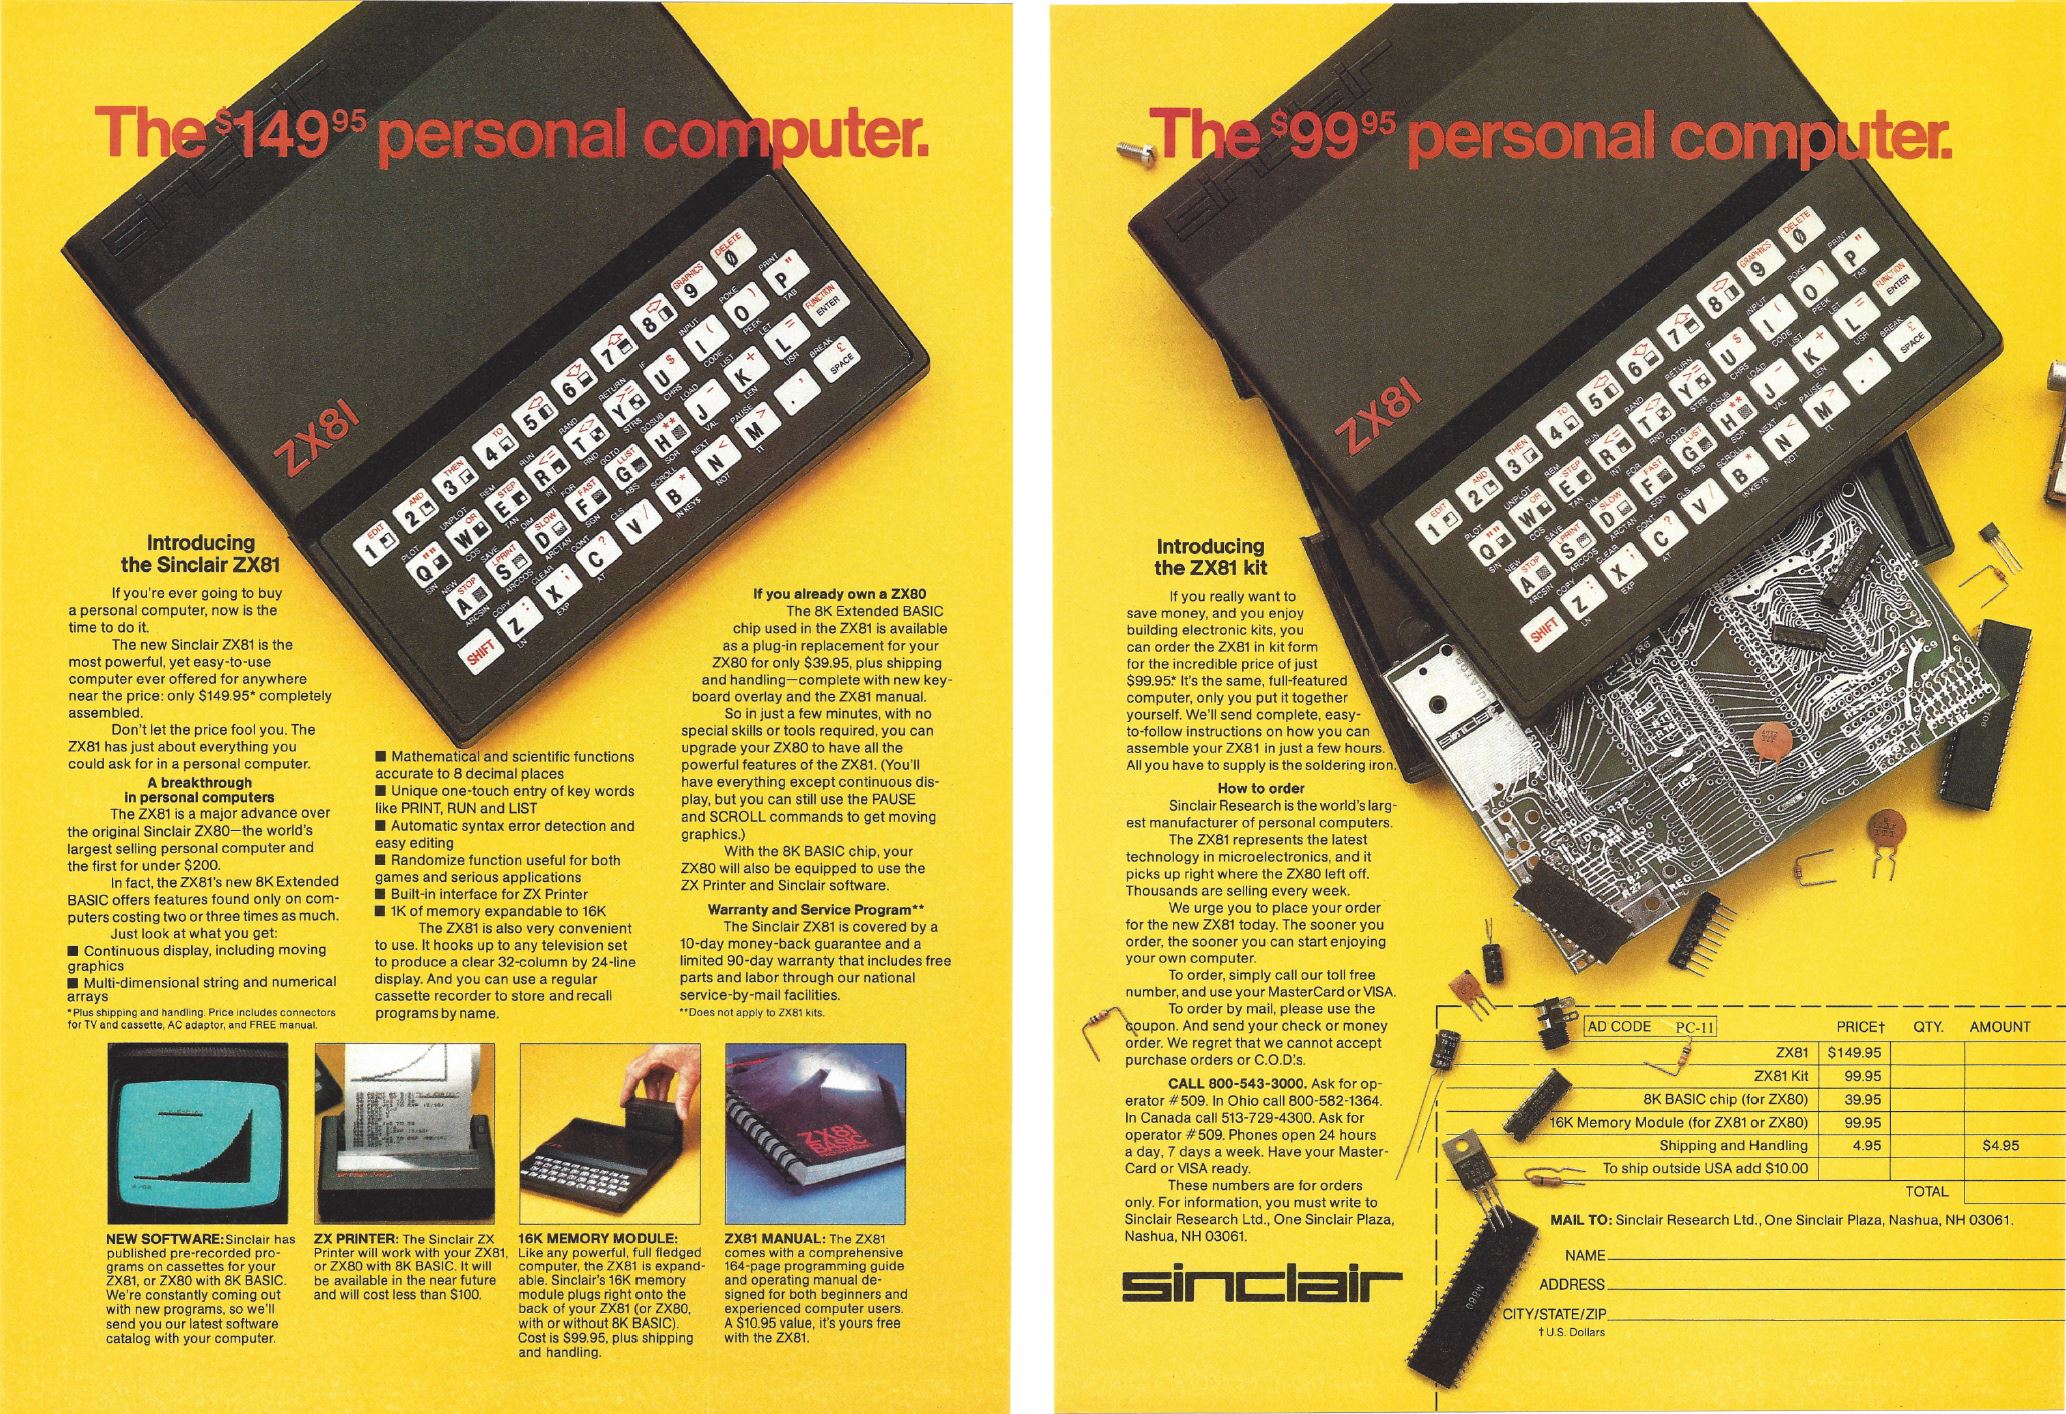 ZX 81 (ZX81)